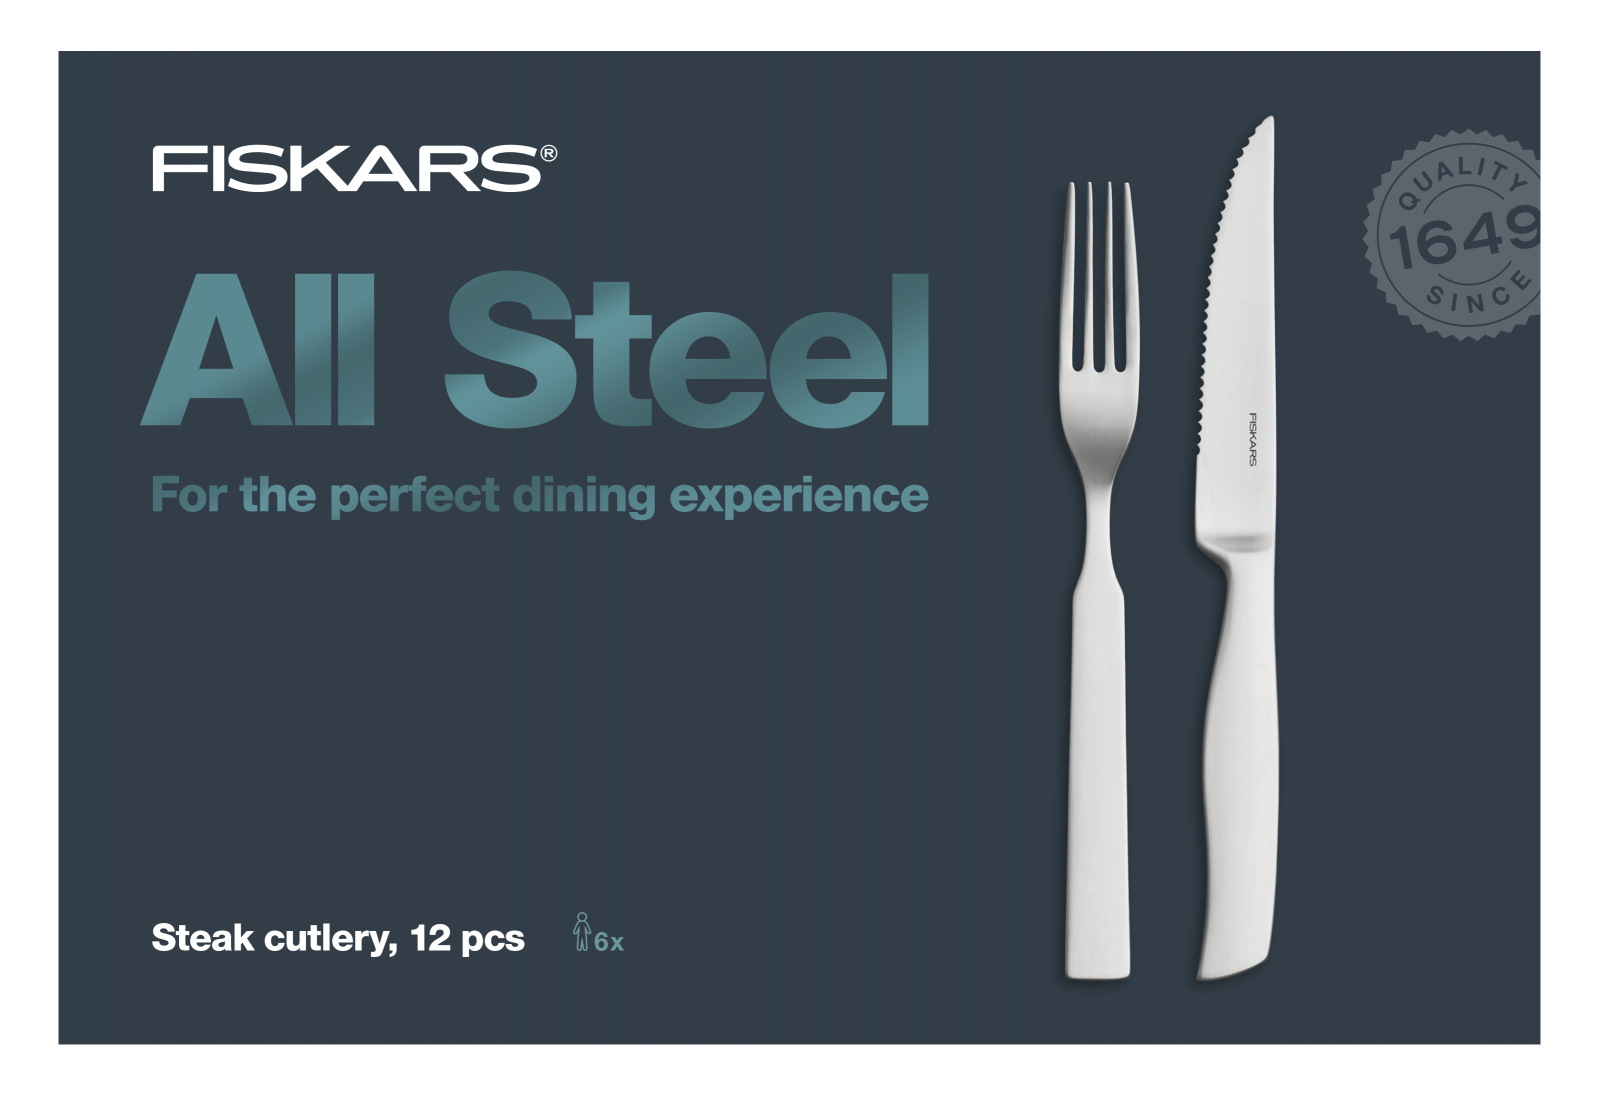 Sada steakovch pbor All Steel, 12 ks 1054800